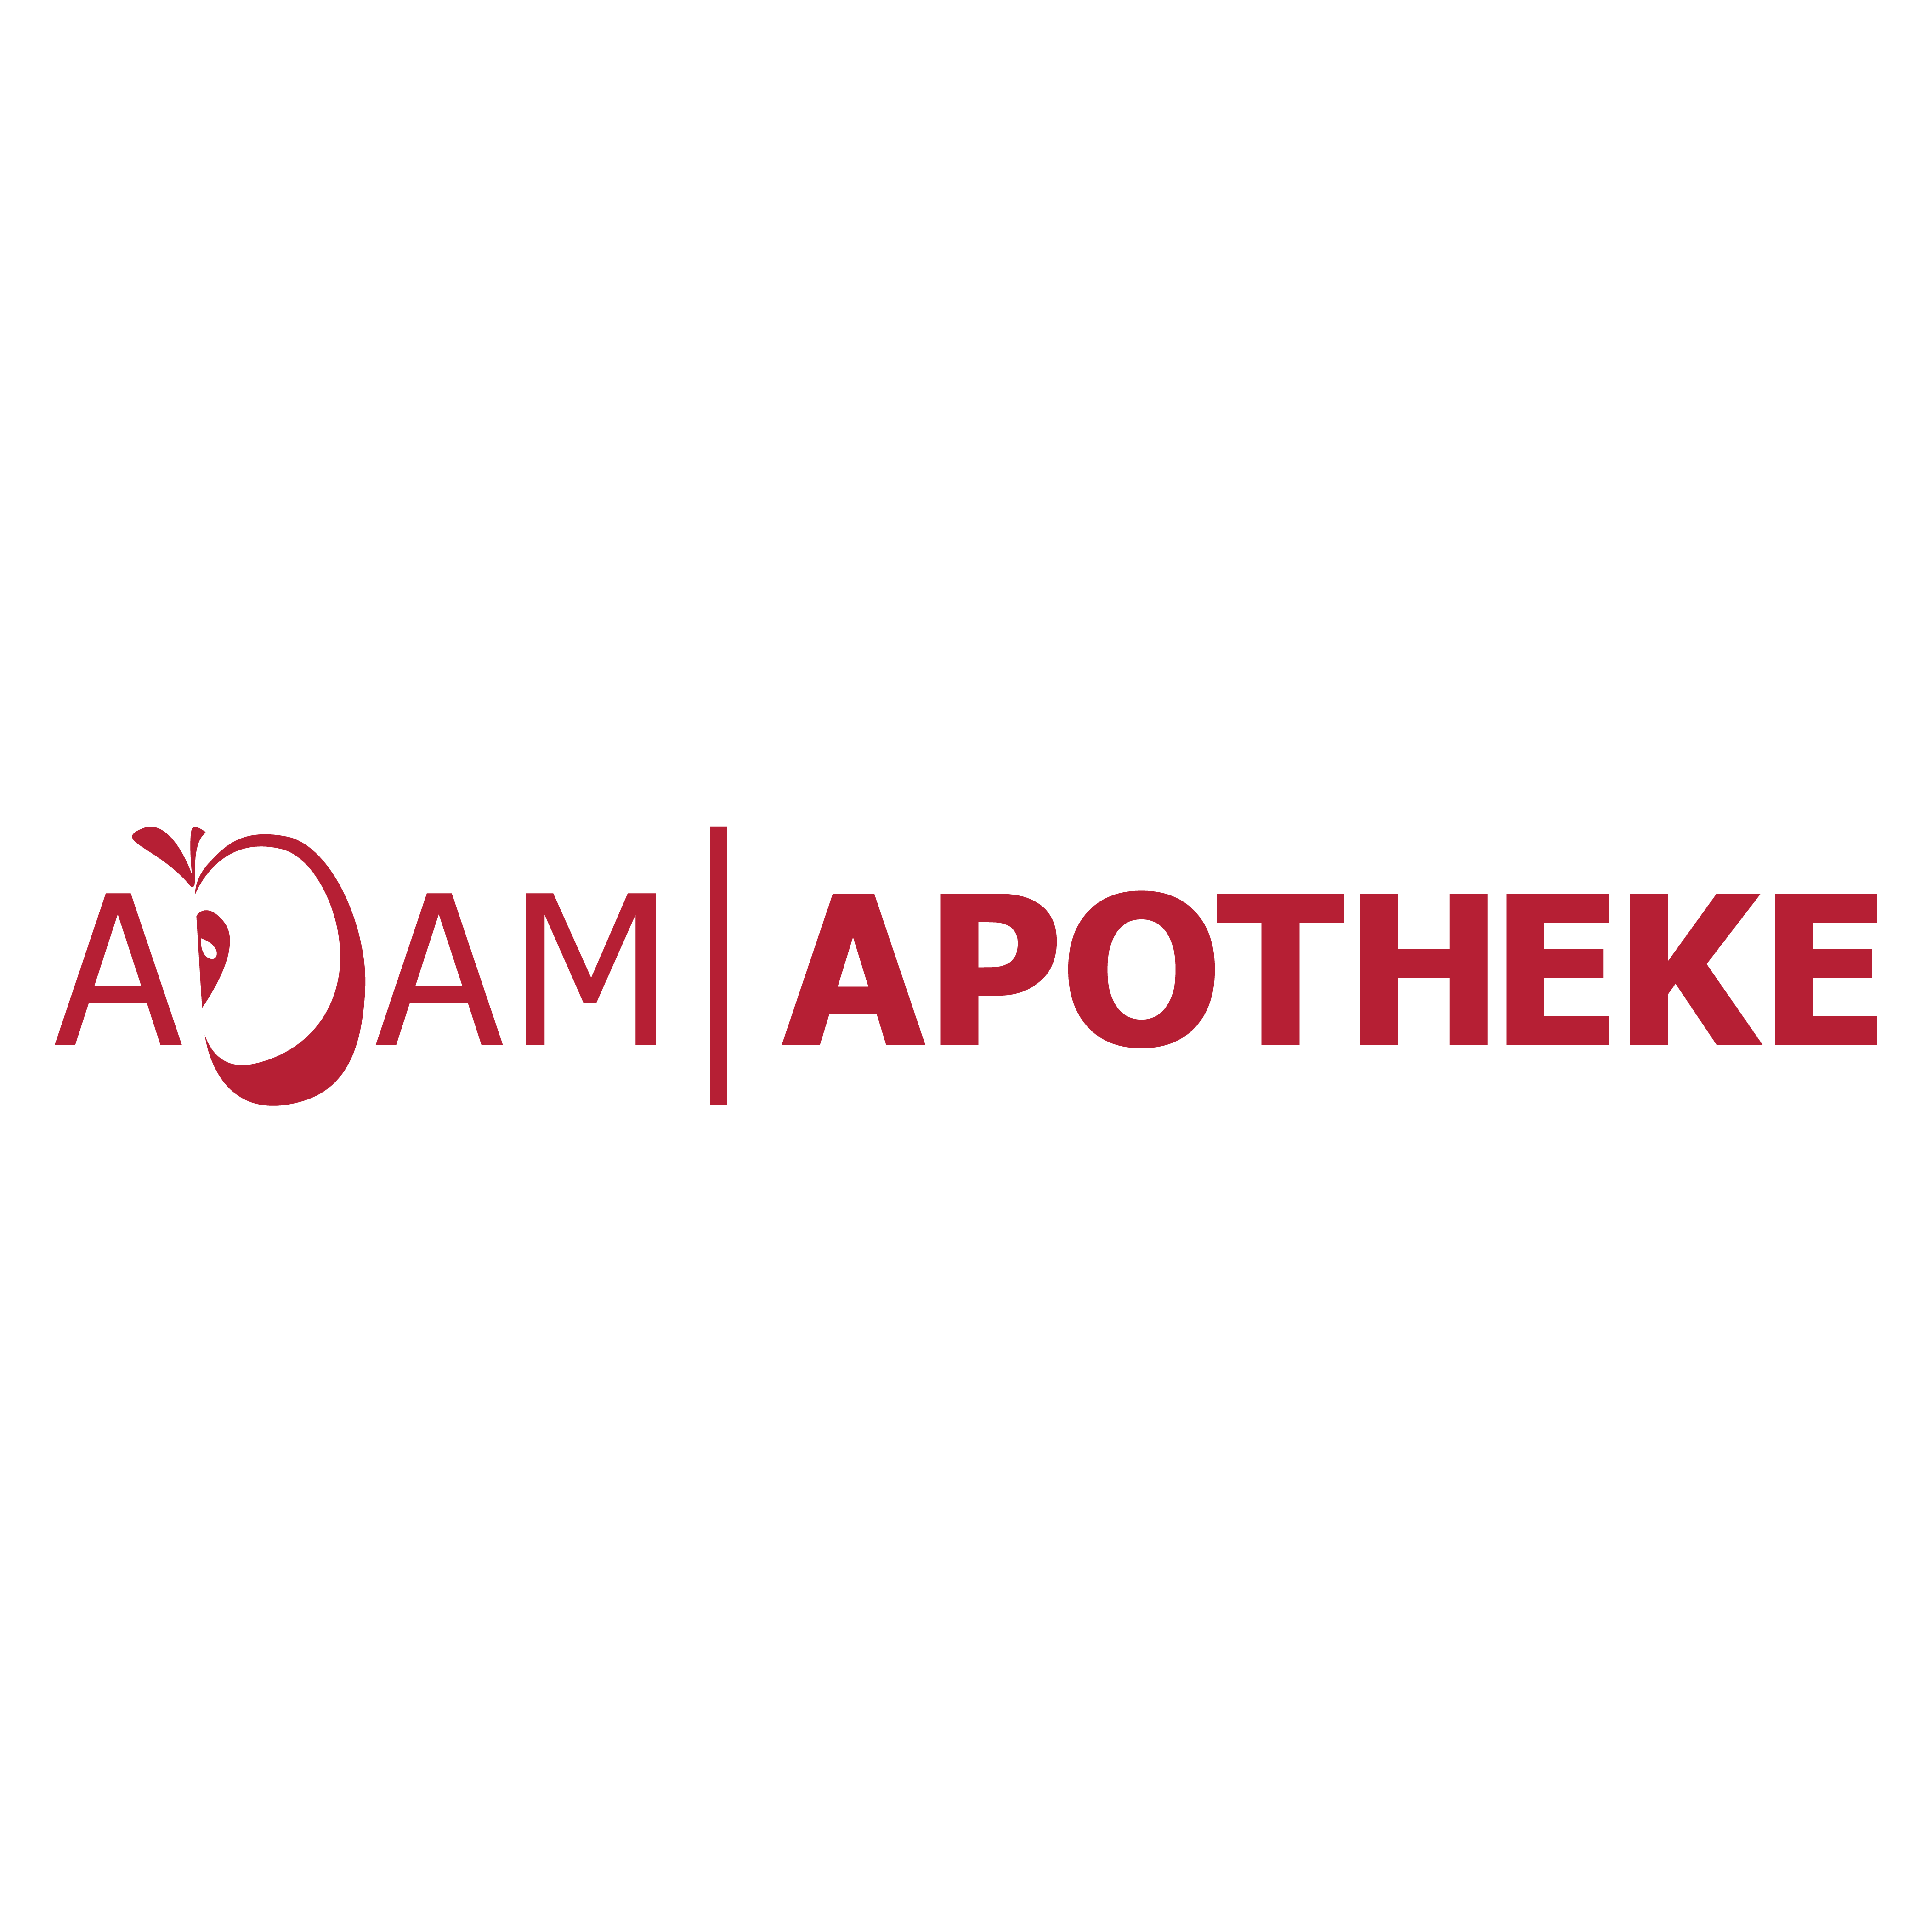 Adam-Apotheke in Rüsselsheim - Logo